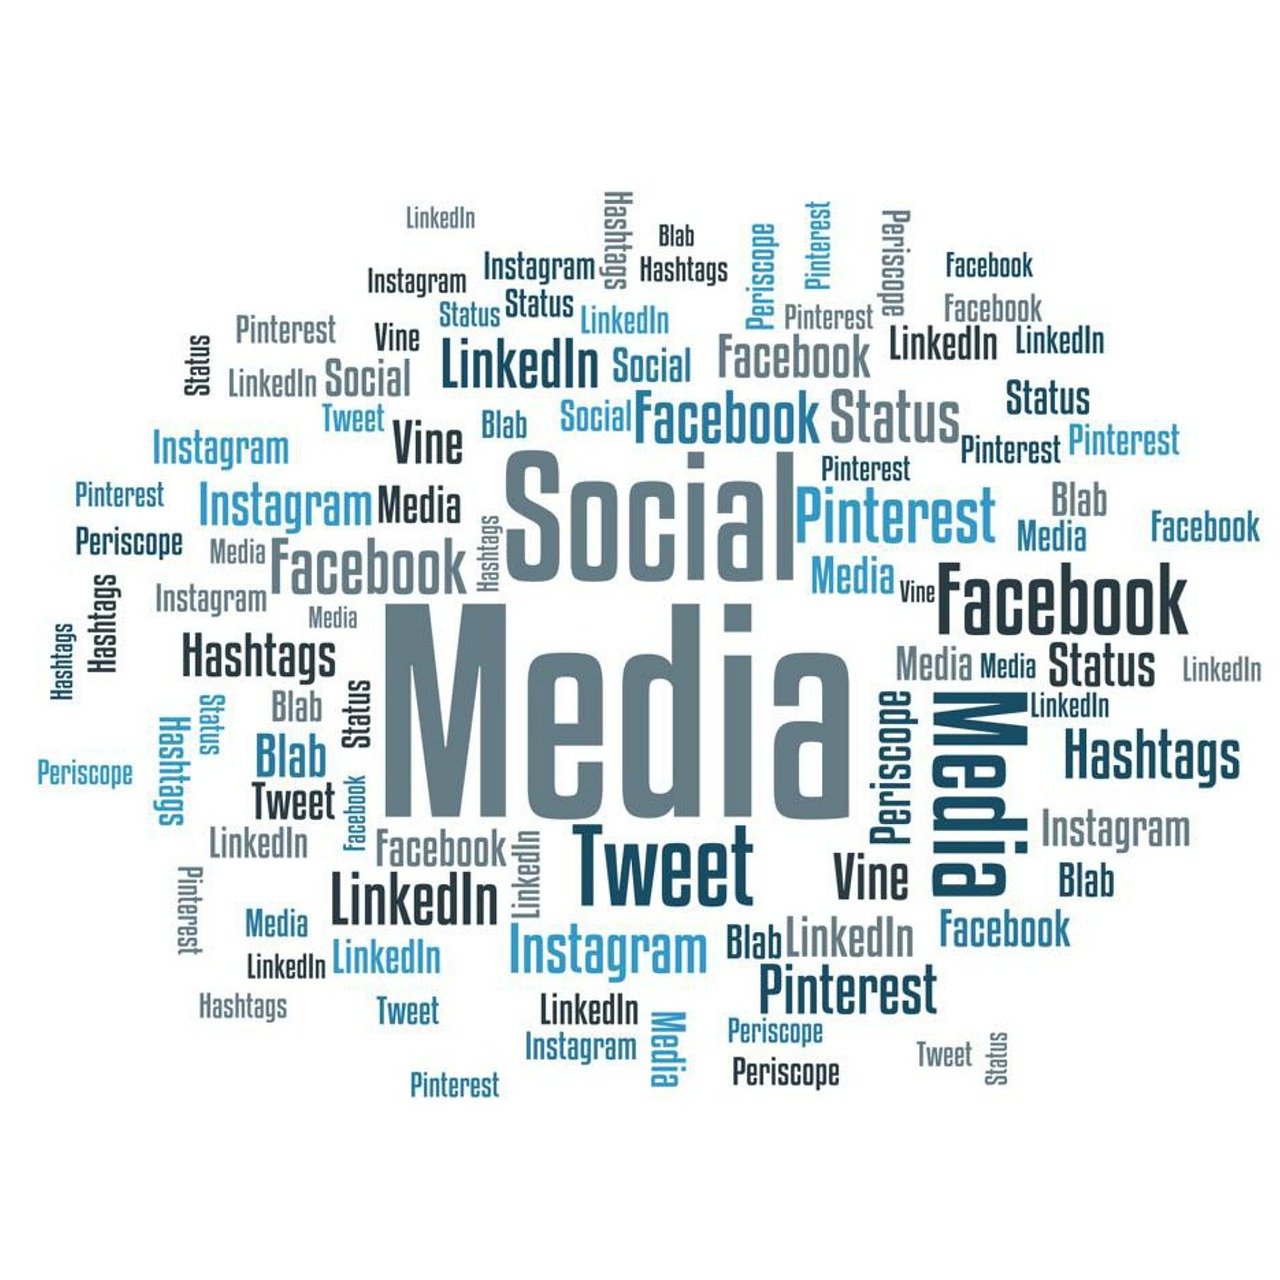 Understanding CFS in Social Media